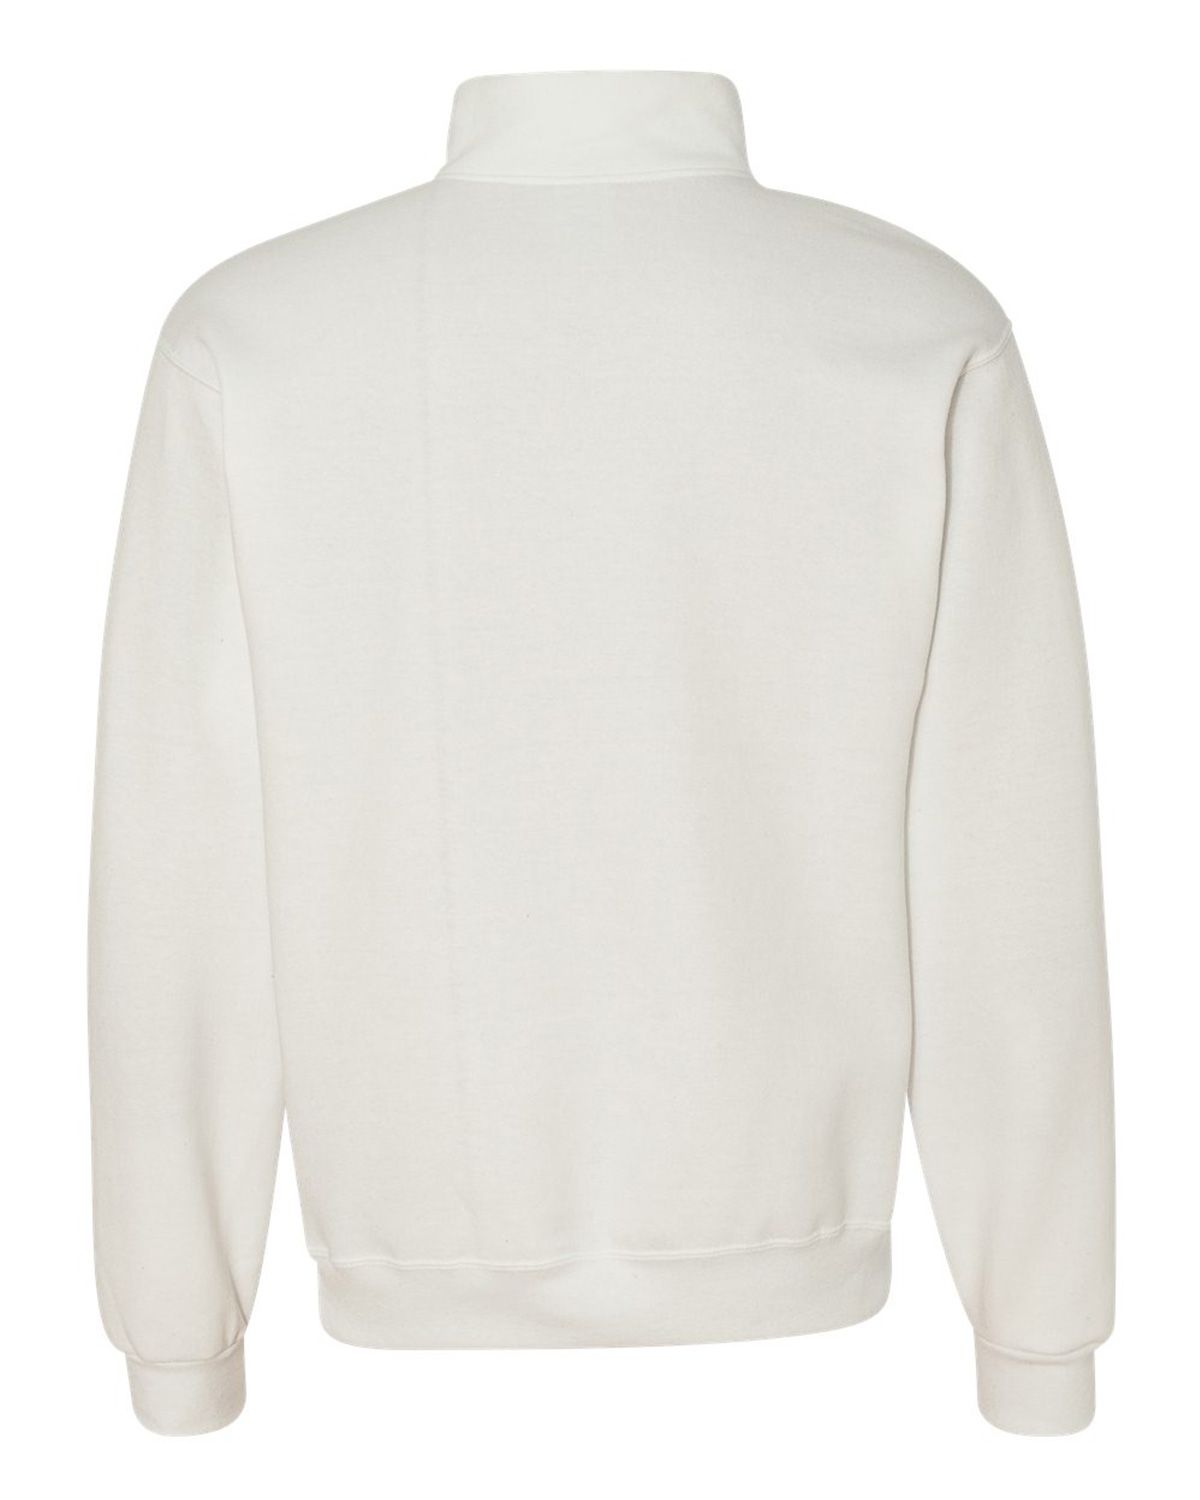 Size Chart for Jerzees 995MR Nublend Quarter-Zip Cadet Collar Sweatshirt